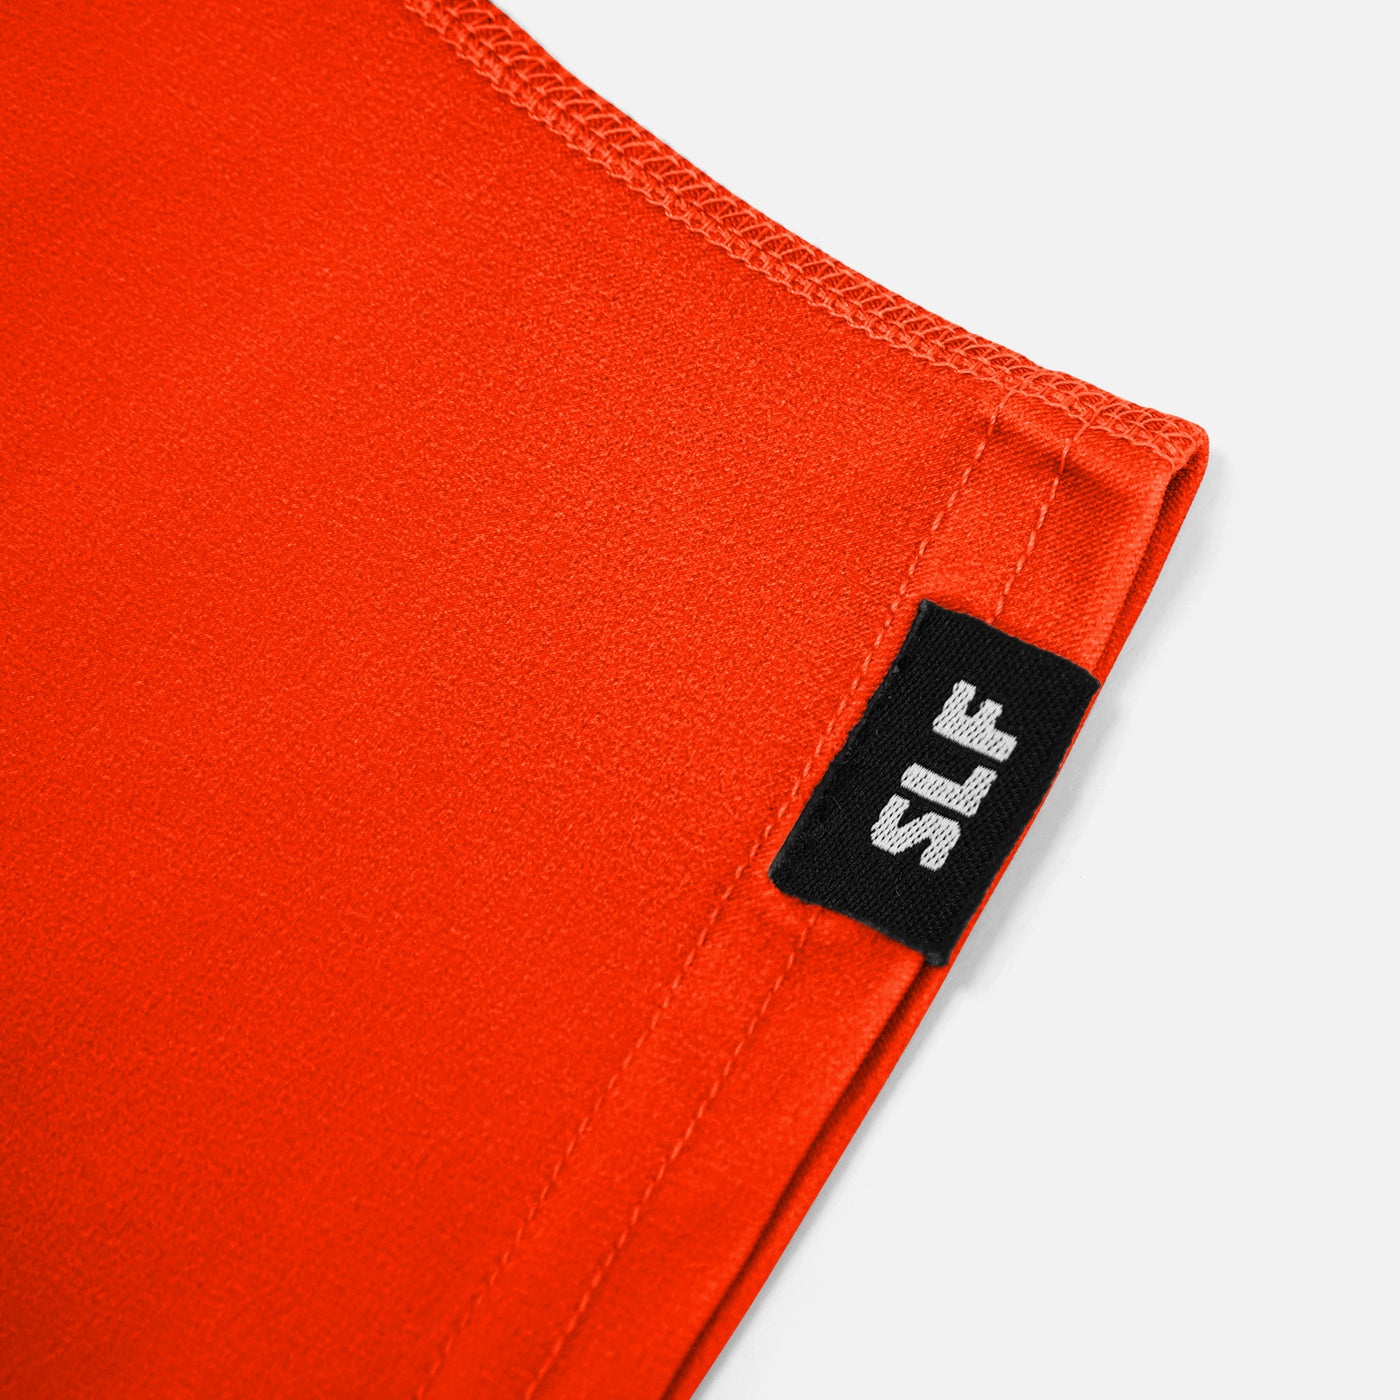 Hue Orange Spats / Cleat Covers - Big